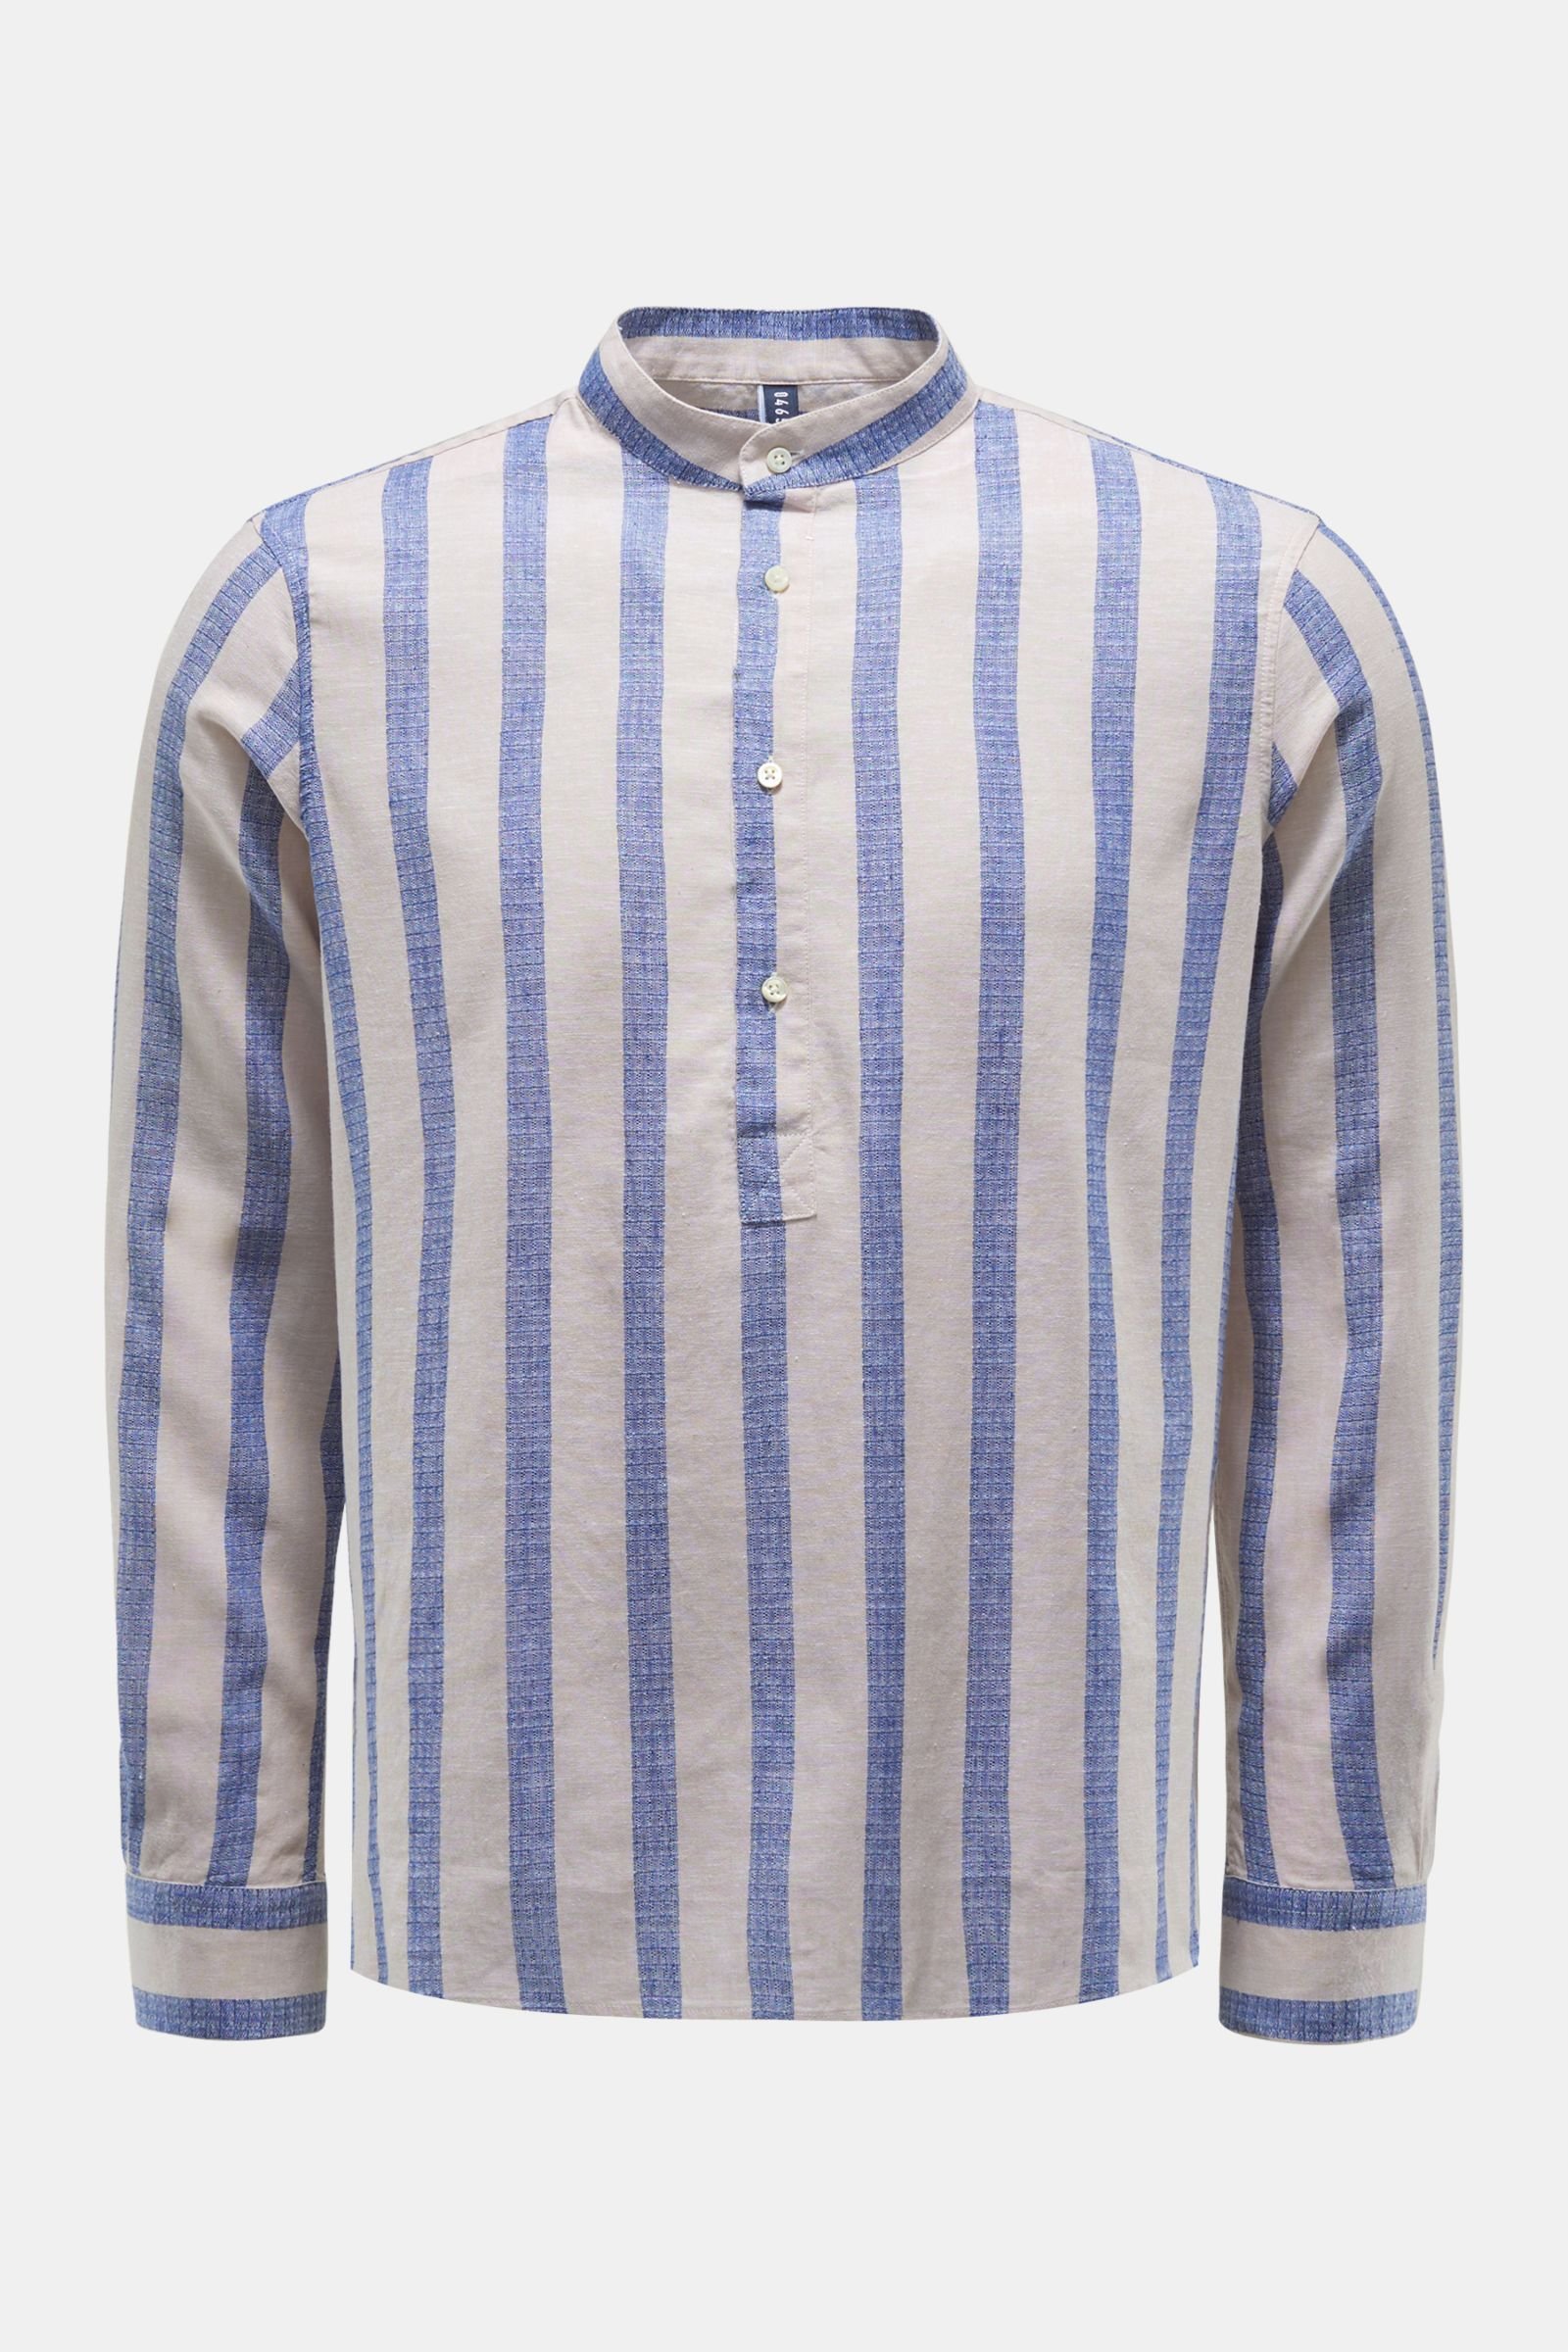 Popover shirt grandad collar grey-blue/beige striped